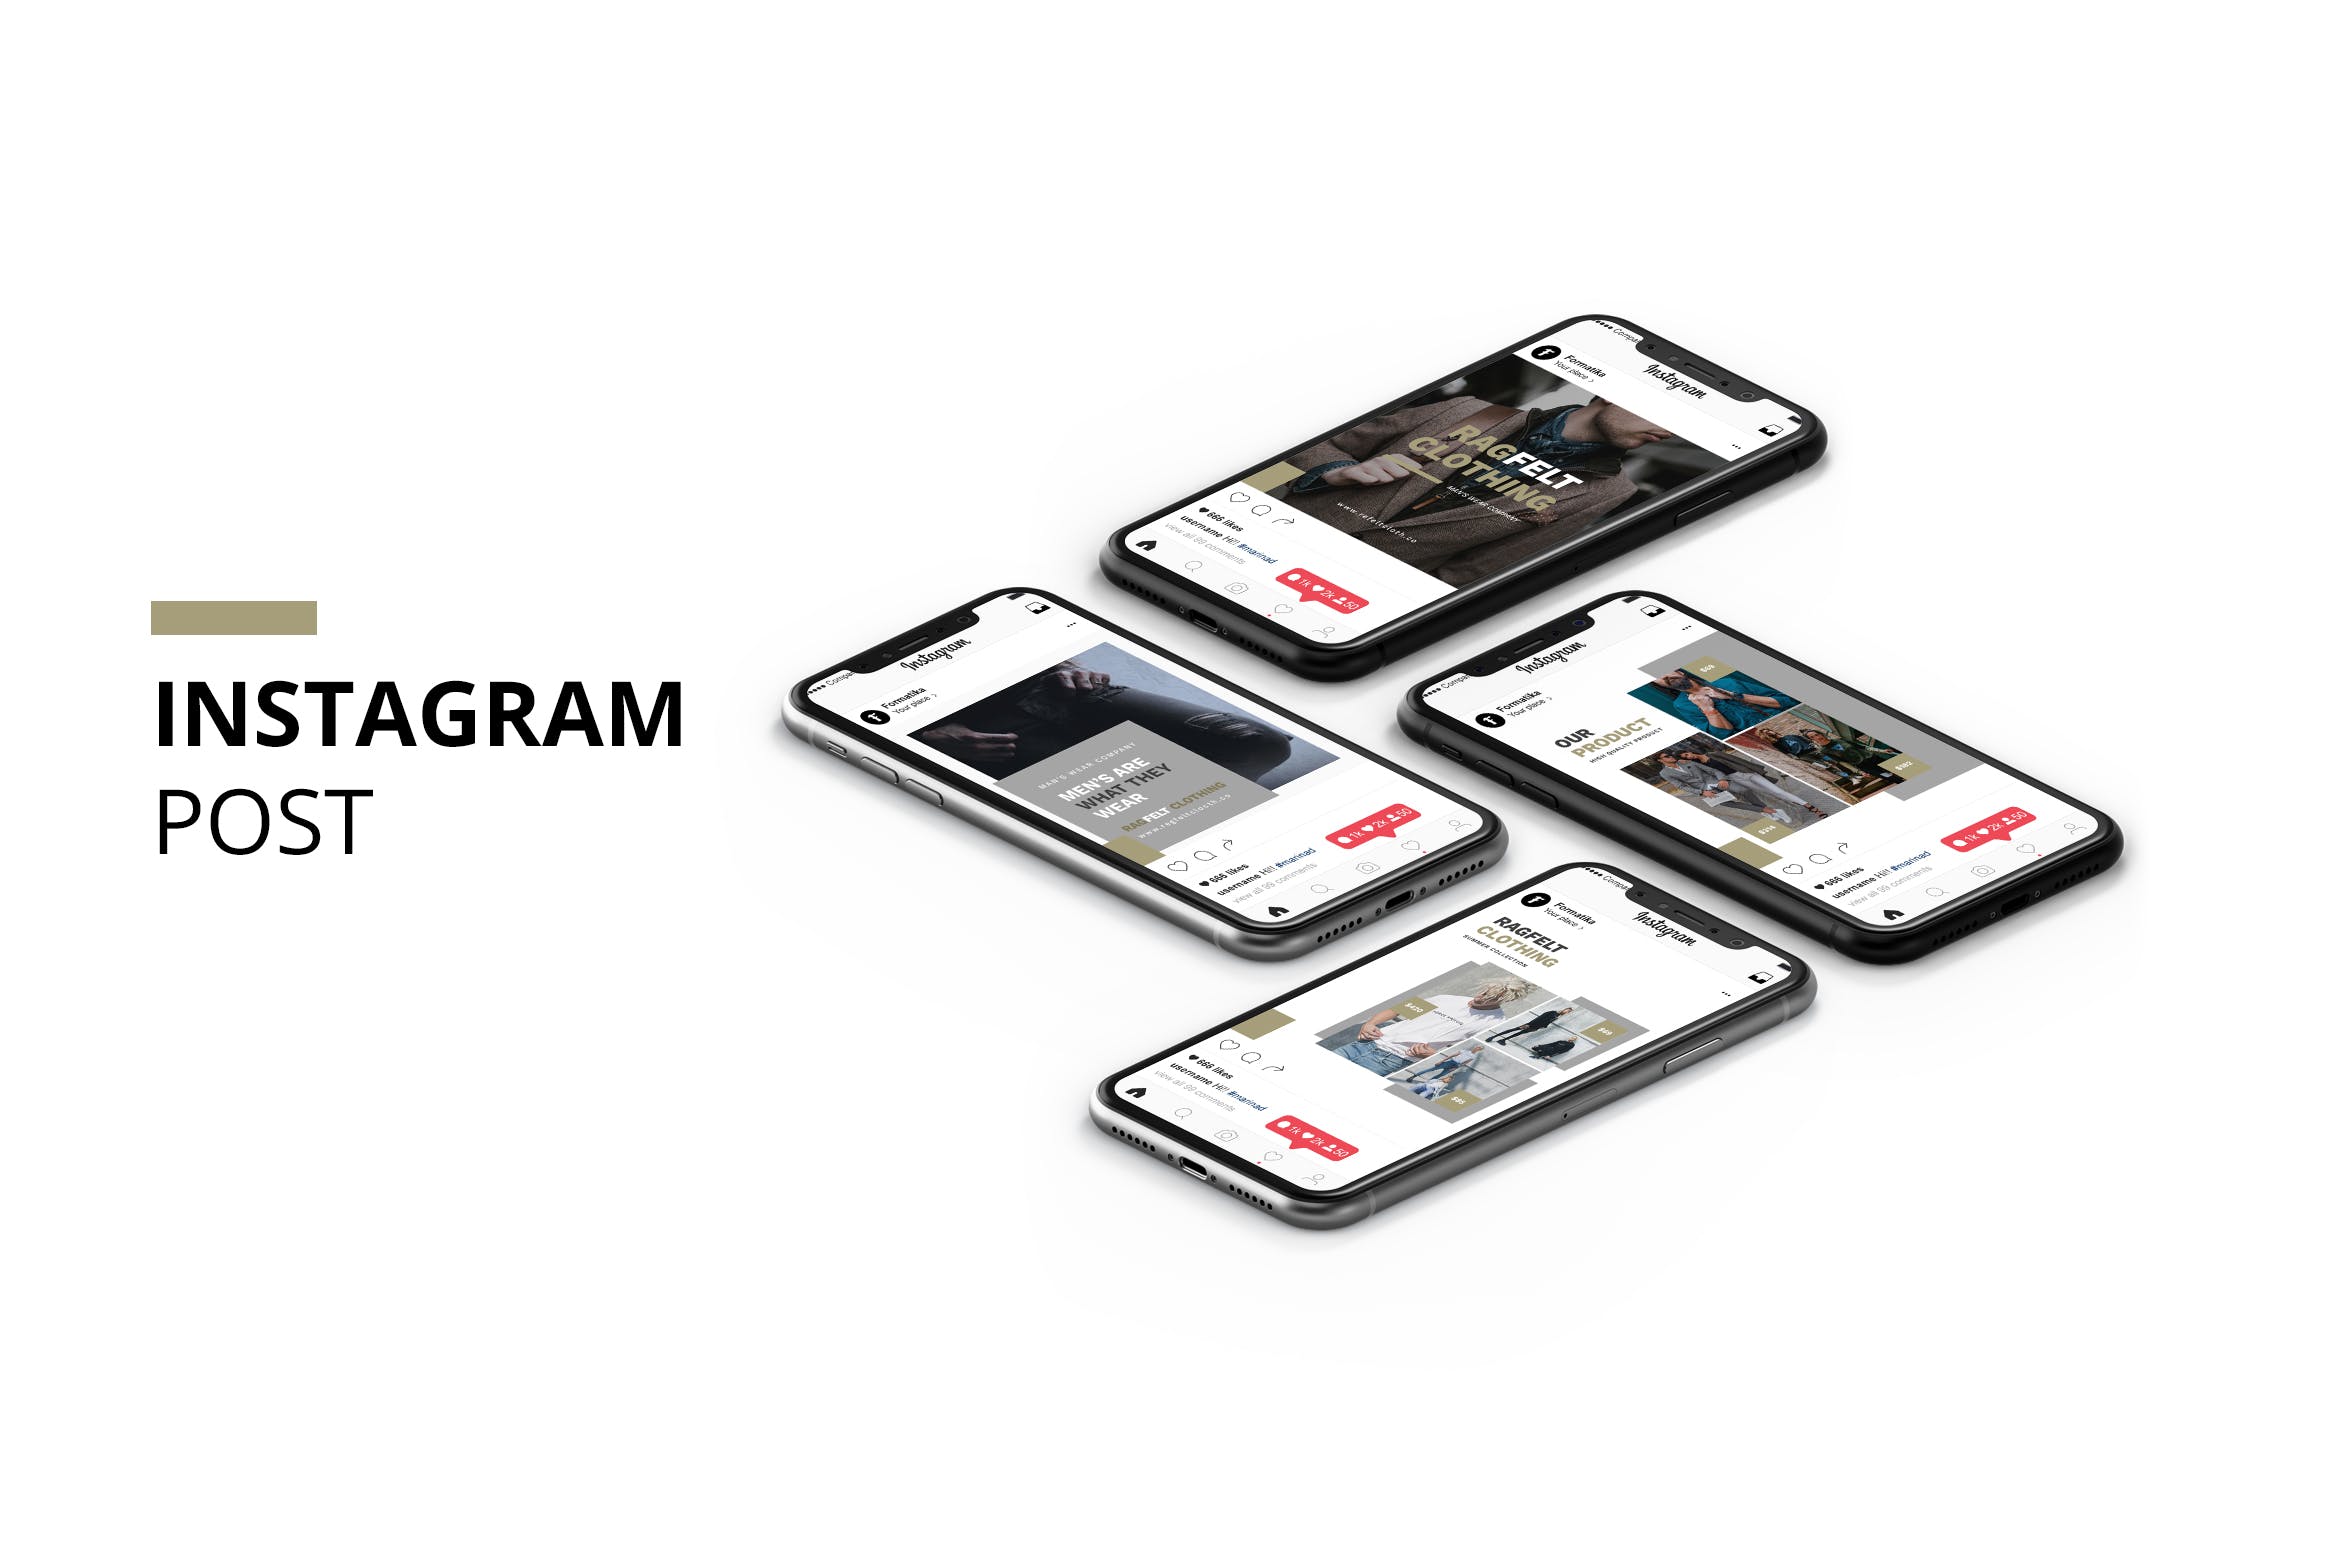 男装品牌推广Instagram贴图设计模板第一素材精选 Ragfelt Man Fashion Instagram Post插图